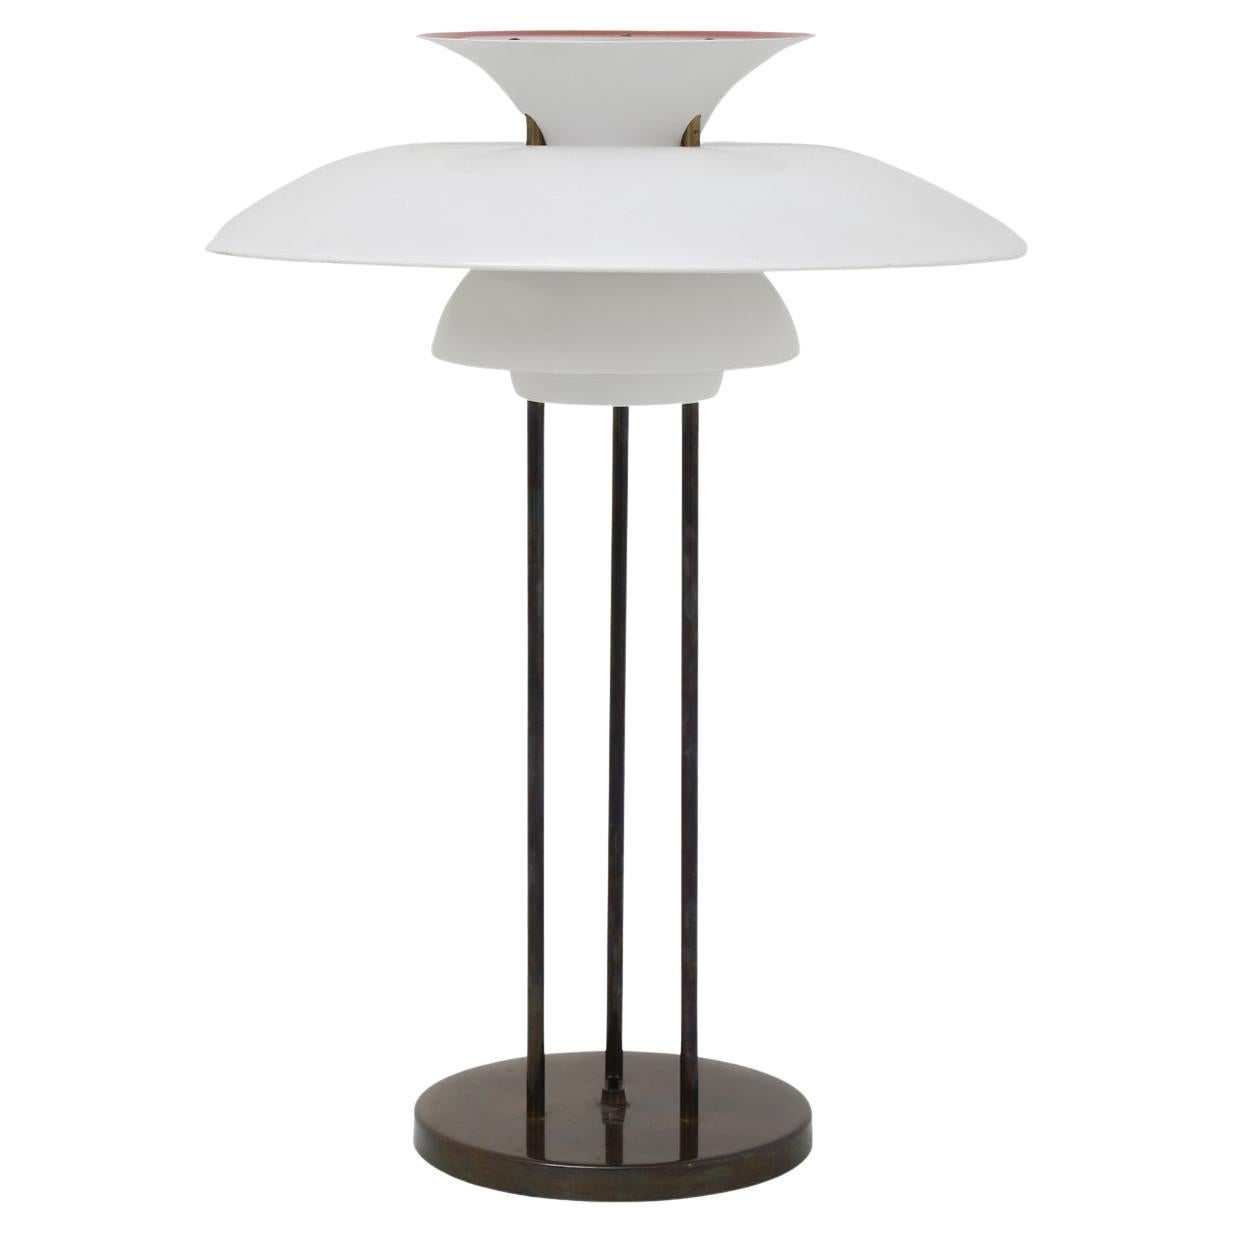 PH 5 Table Lamp by Poul Henningsen